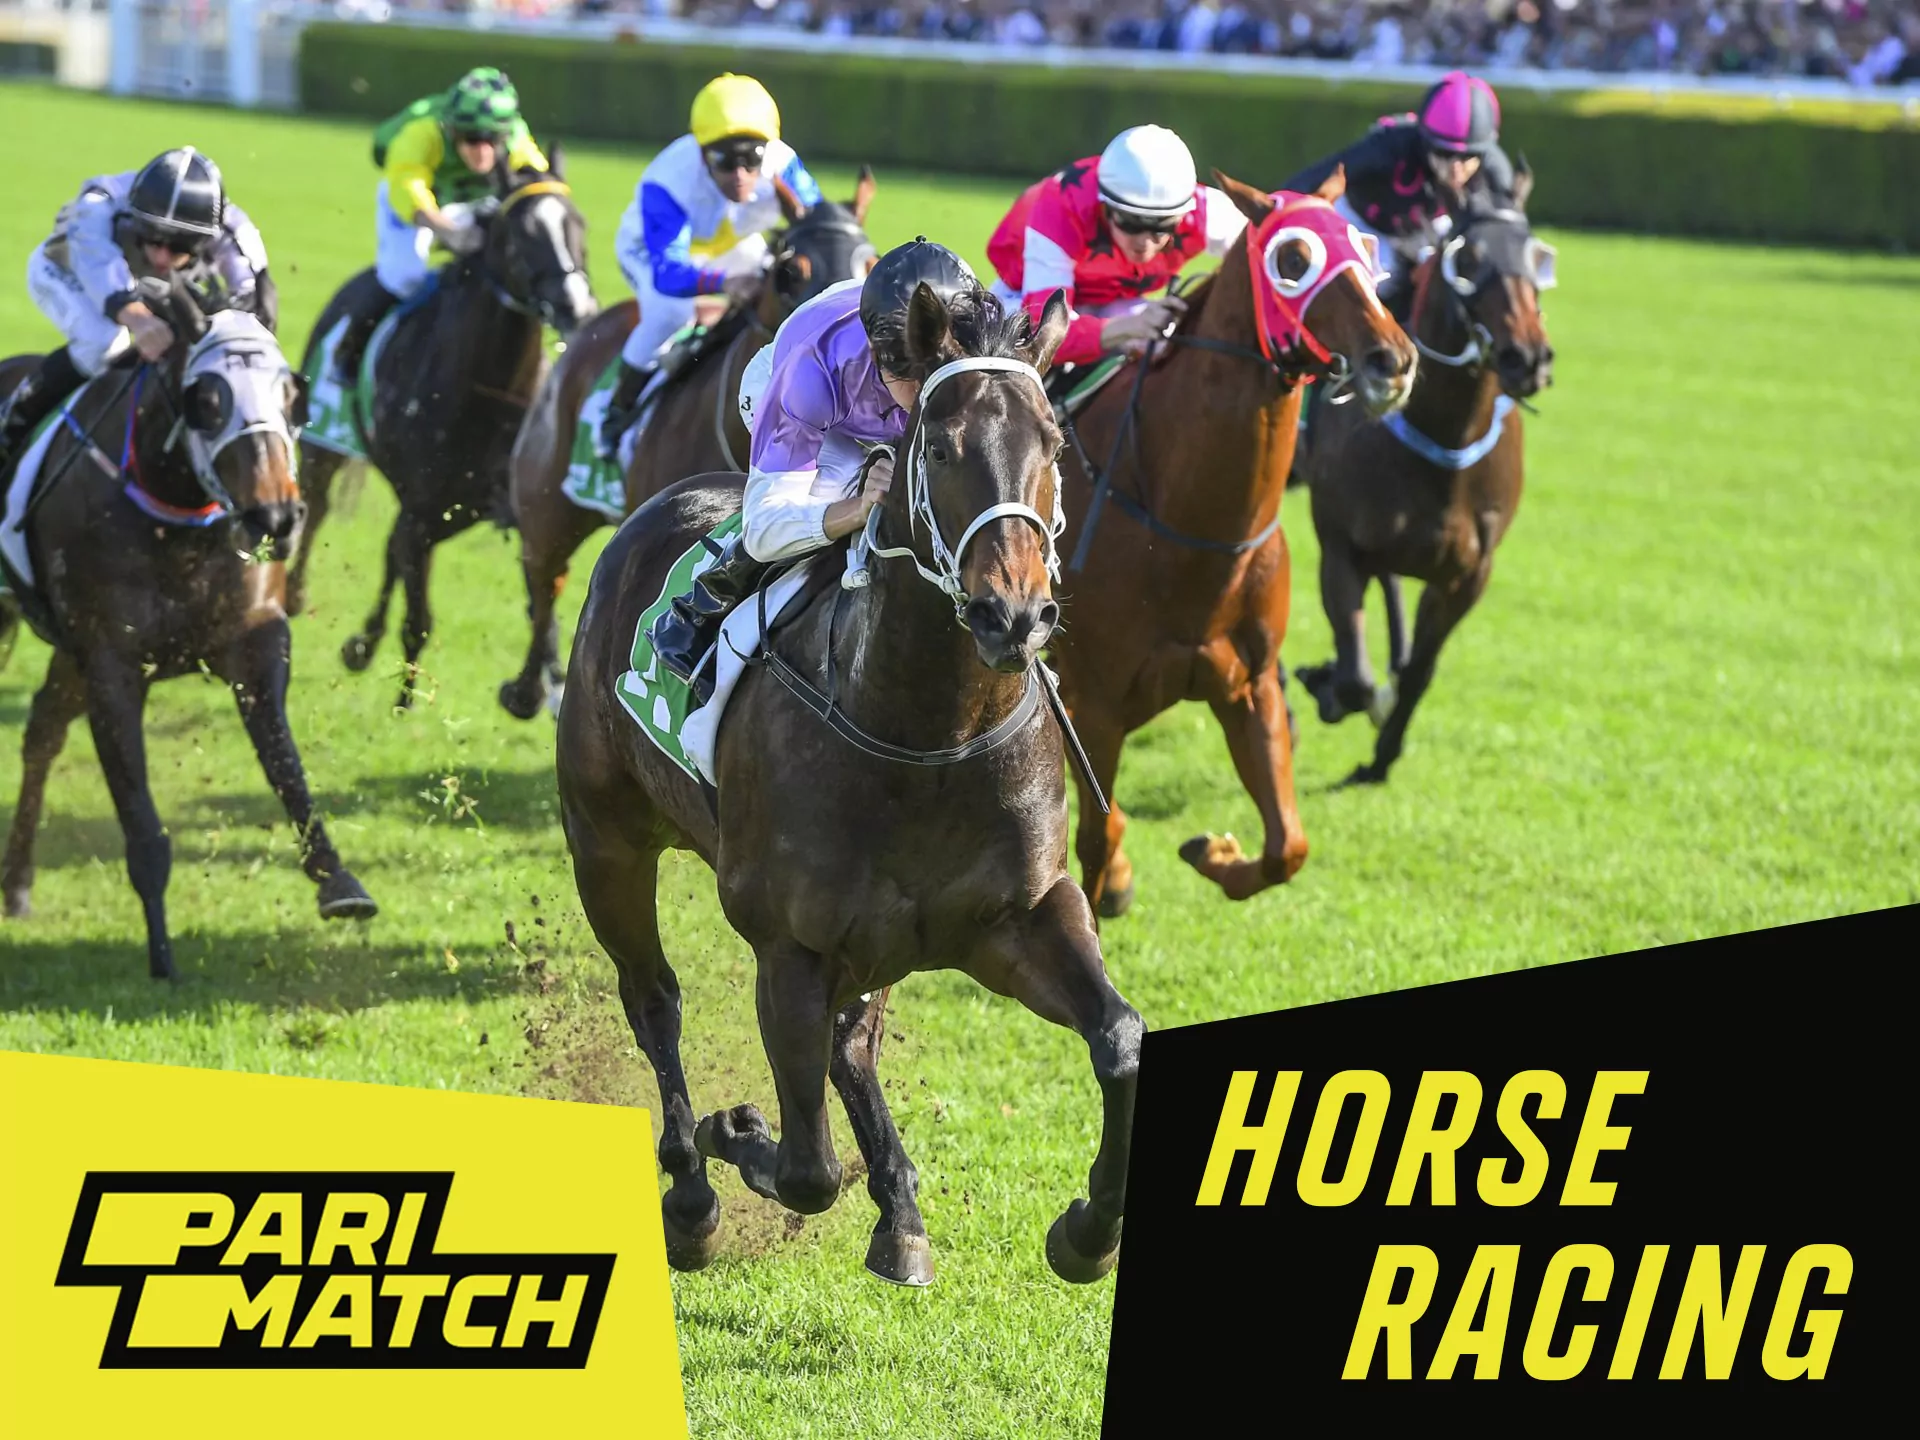 Horse racing betting on Parimatch.